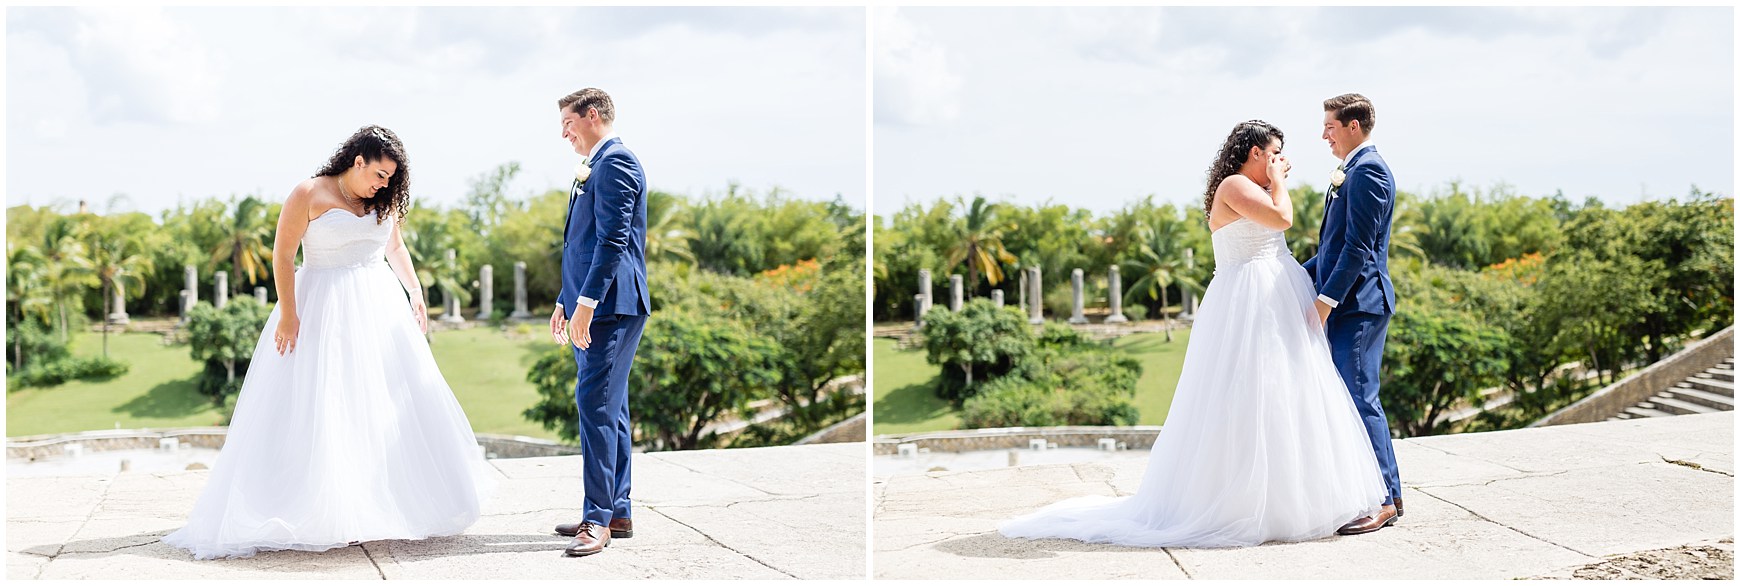 Destination Wedding at Altos de Chavon in the Dominican Republic - Estefania and Ryan_0016.jpg